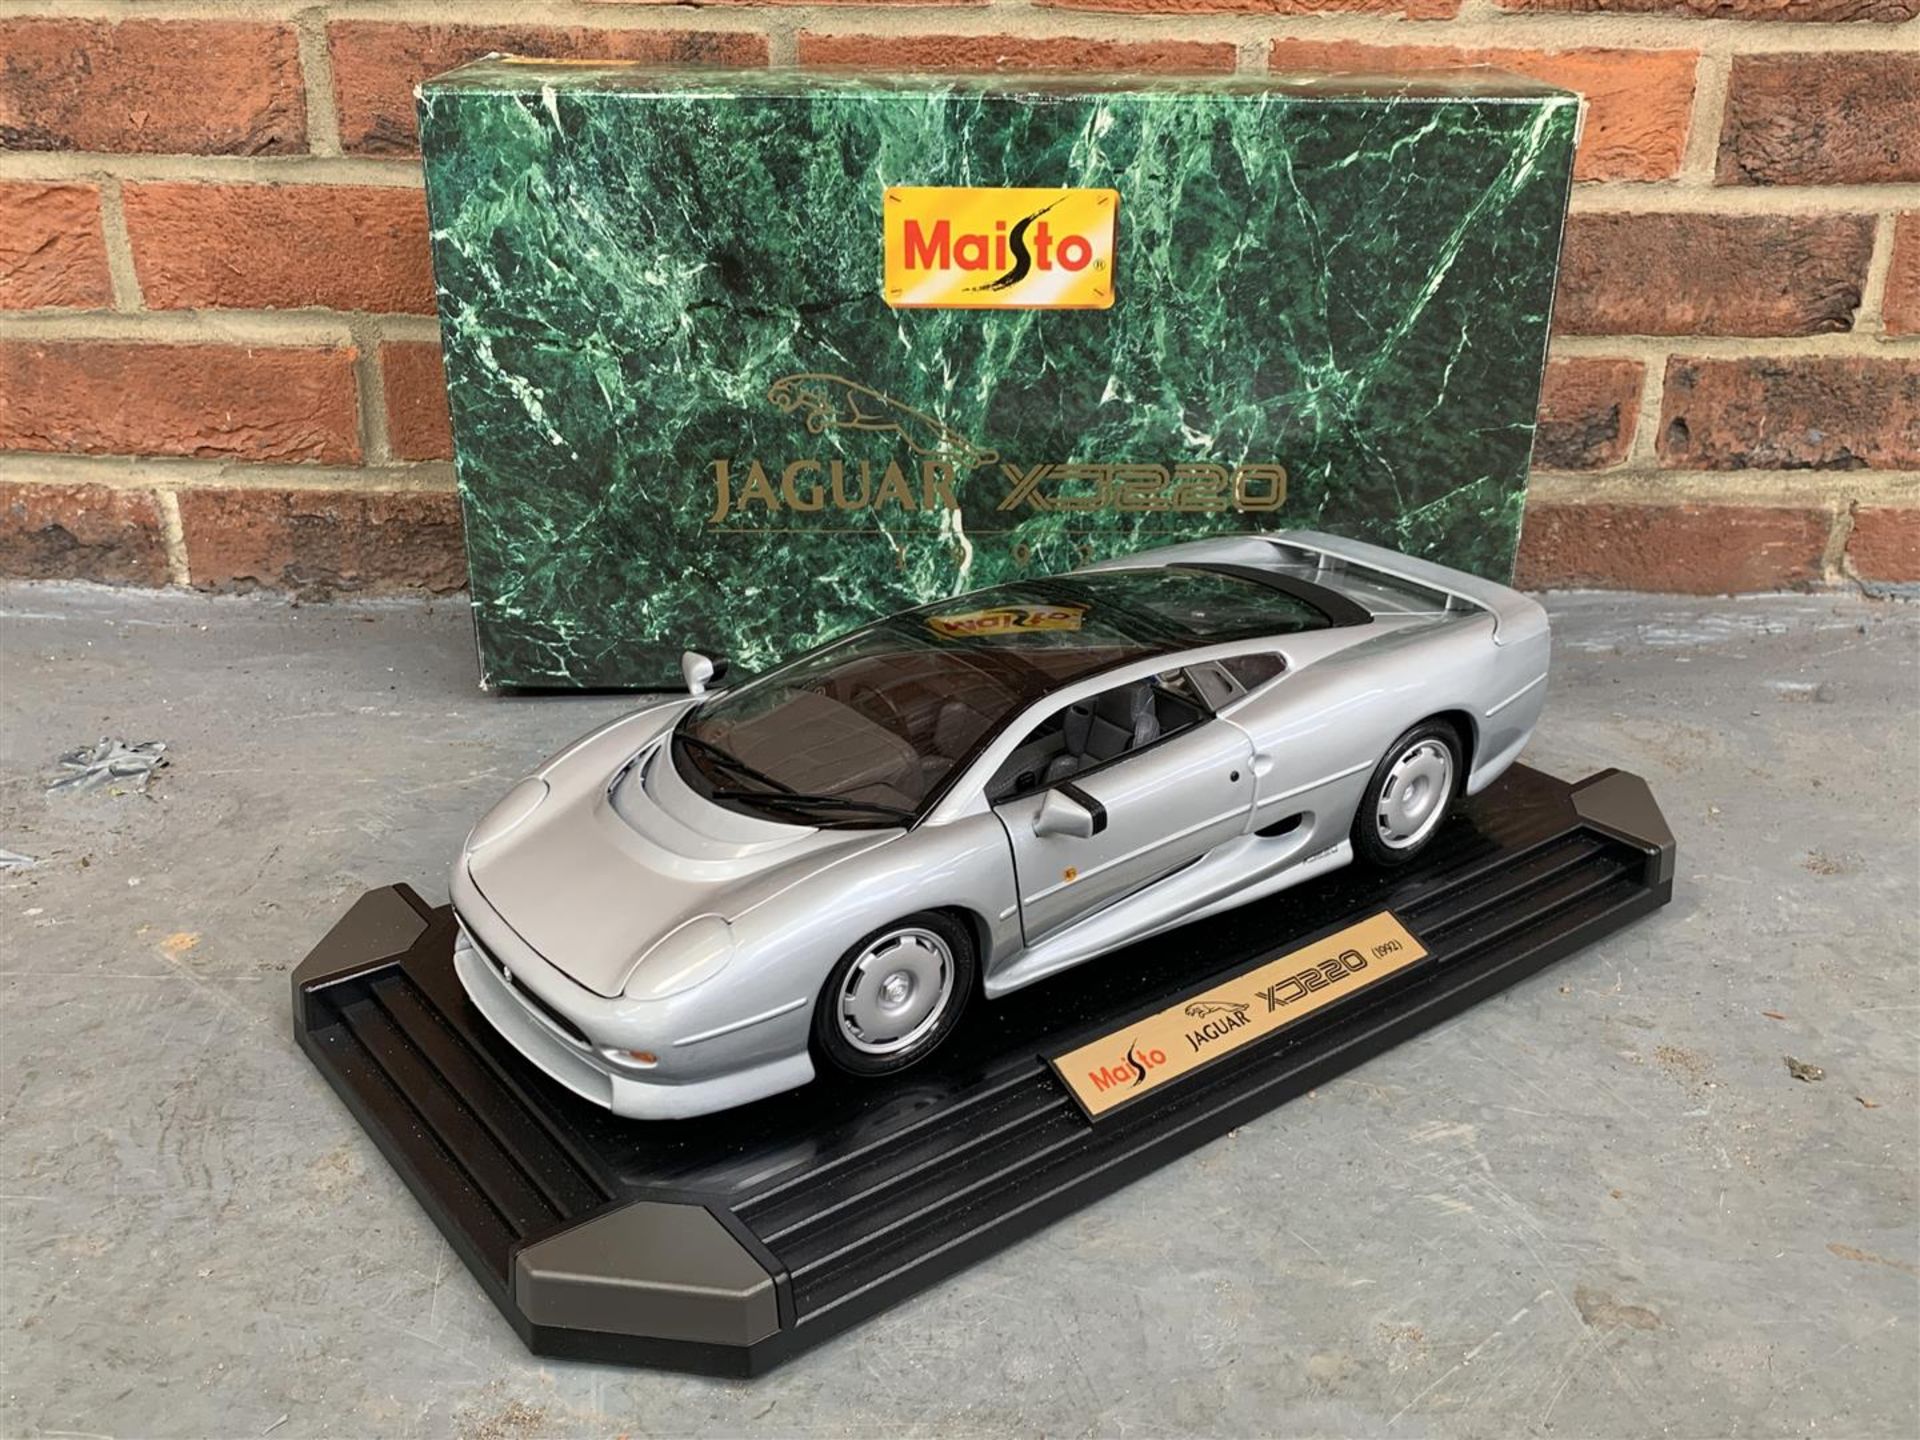 Maisto 1/12 Scale Jaguar XJ220 Boxed Model Car